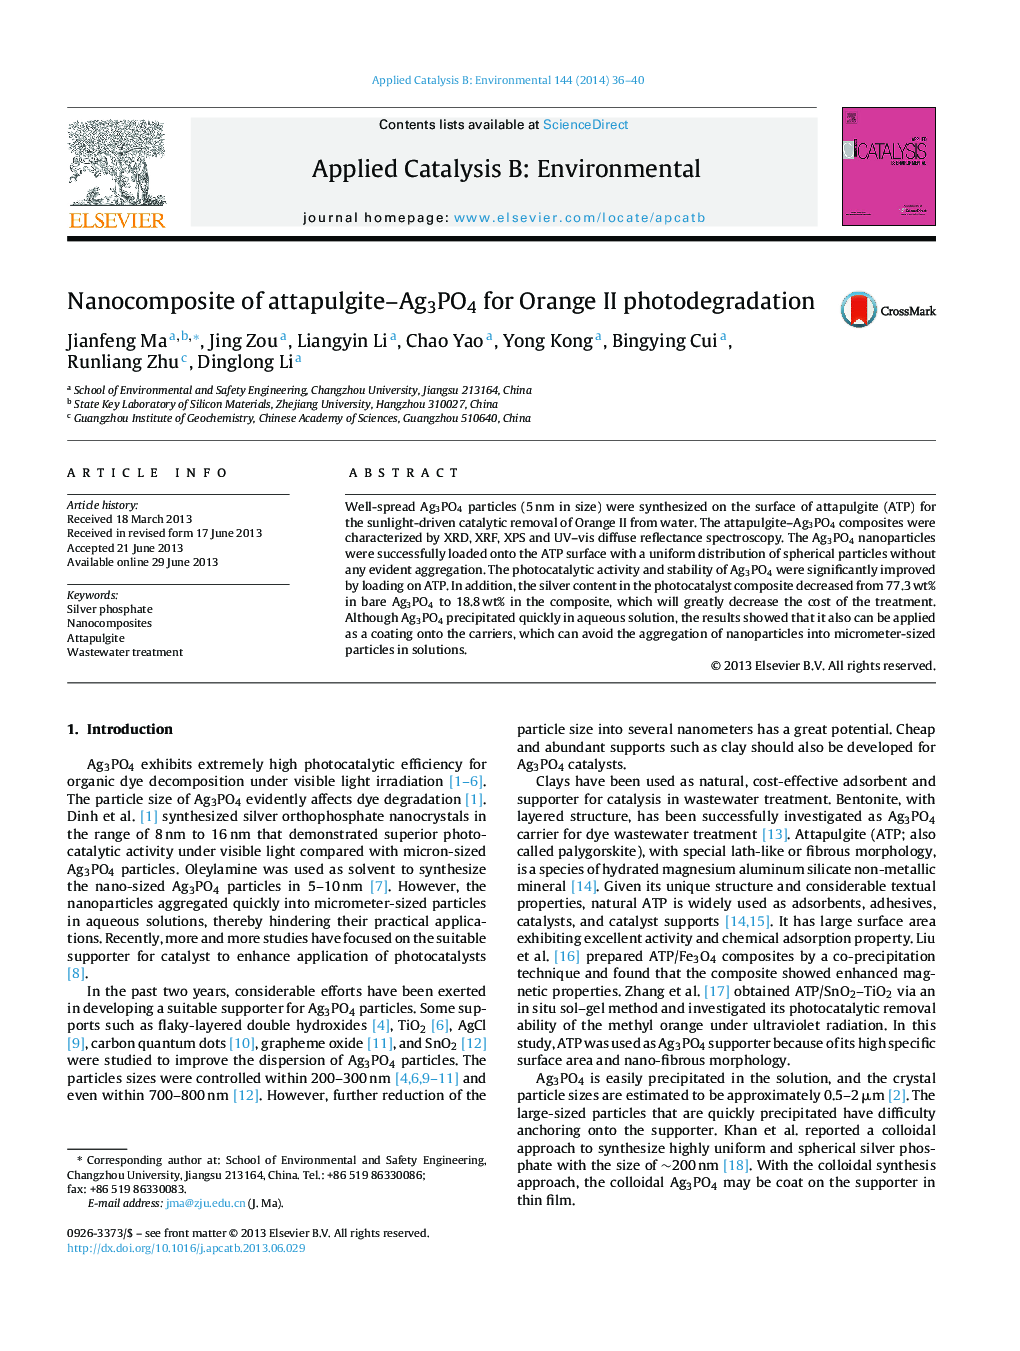 Nanocomposite of attapulgite–Ag3PO4 for Orange II photodegradation